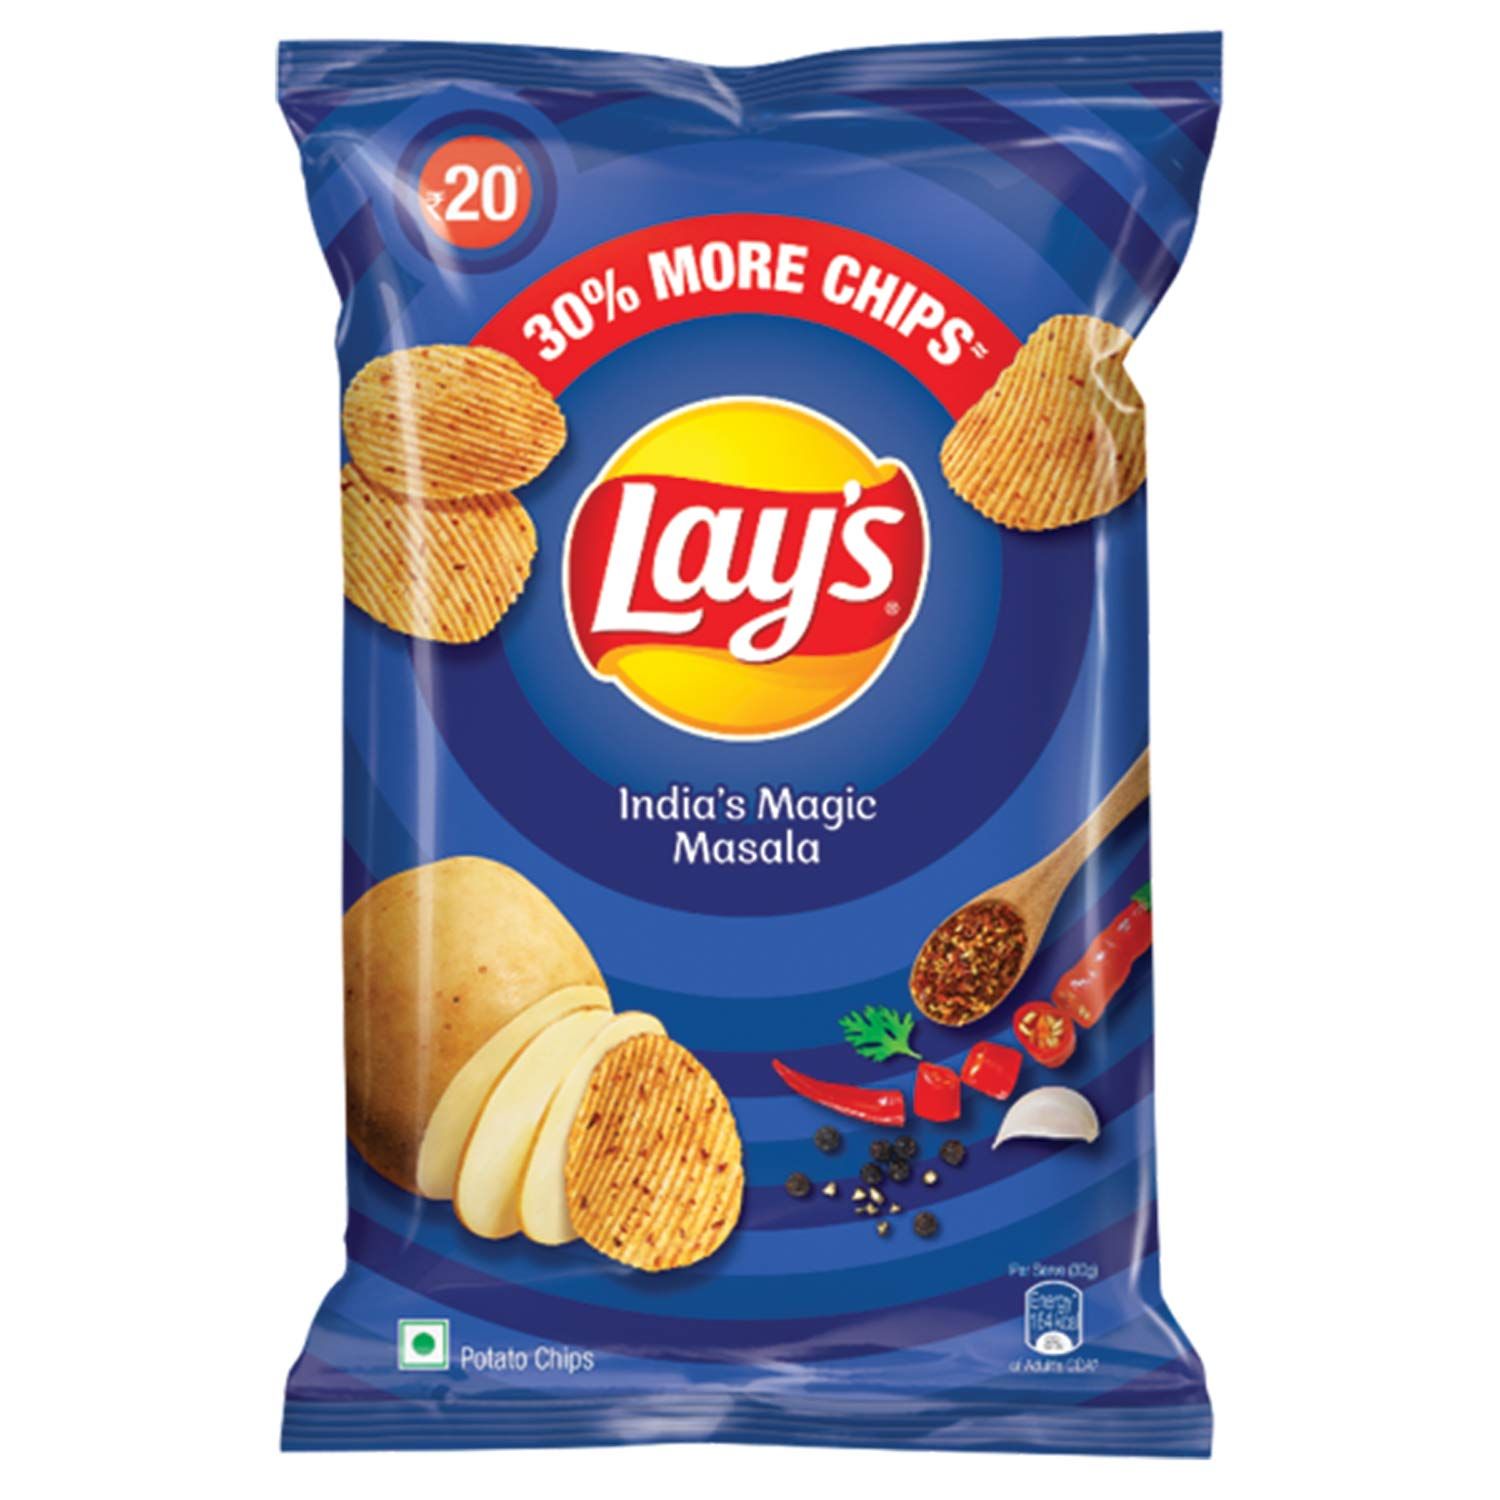 Lay's Potato Chips India's Magic Masala Image